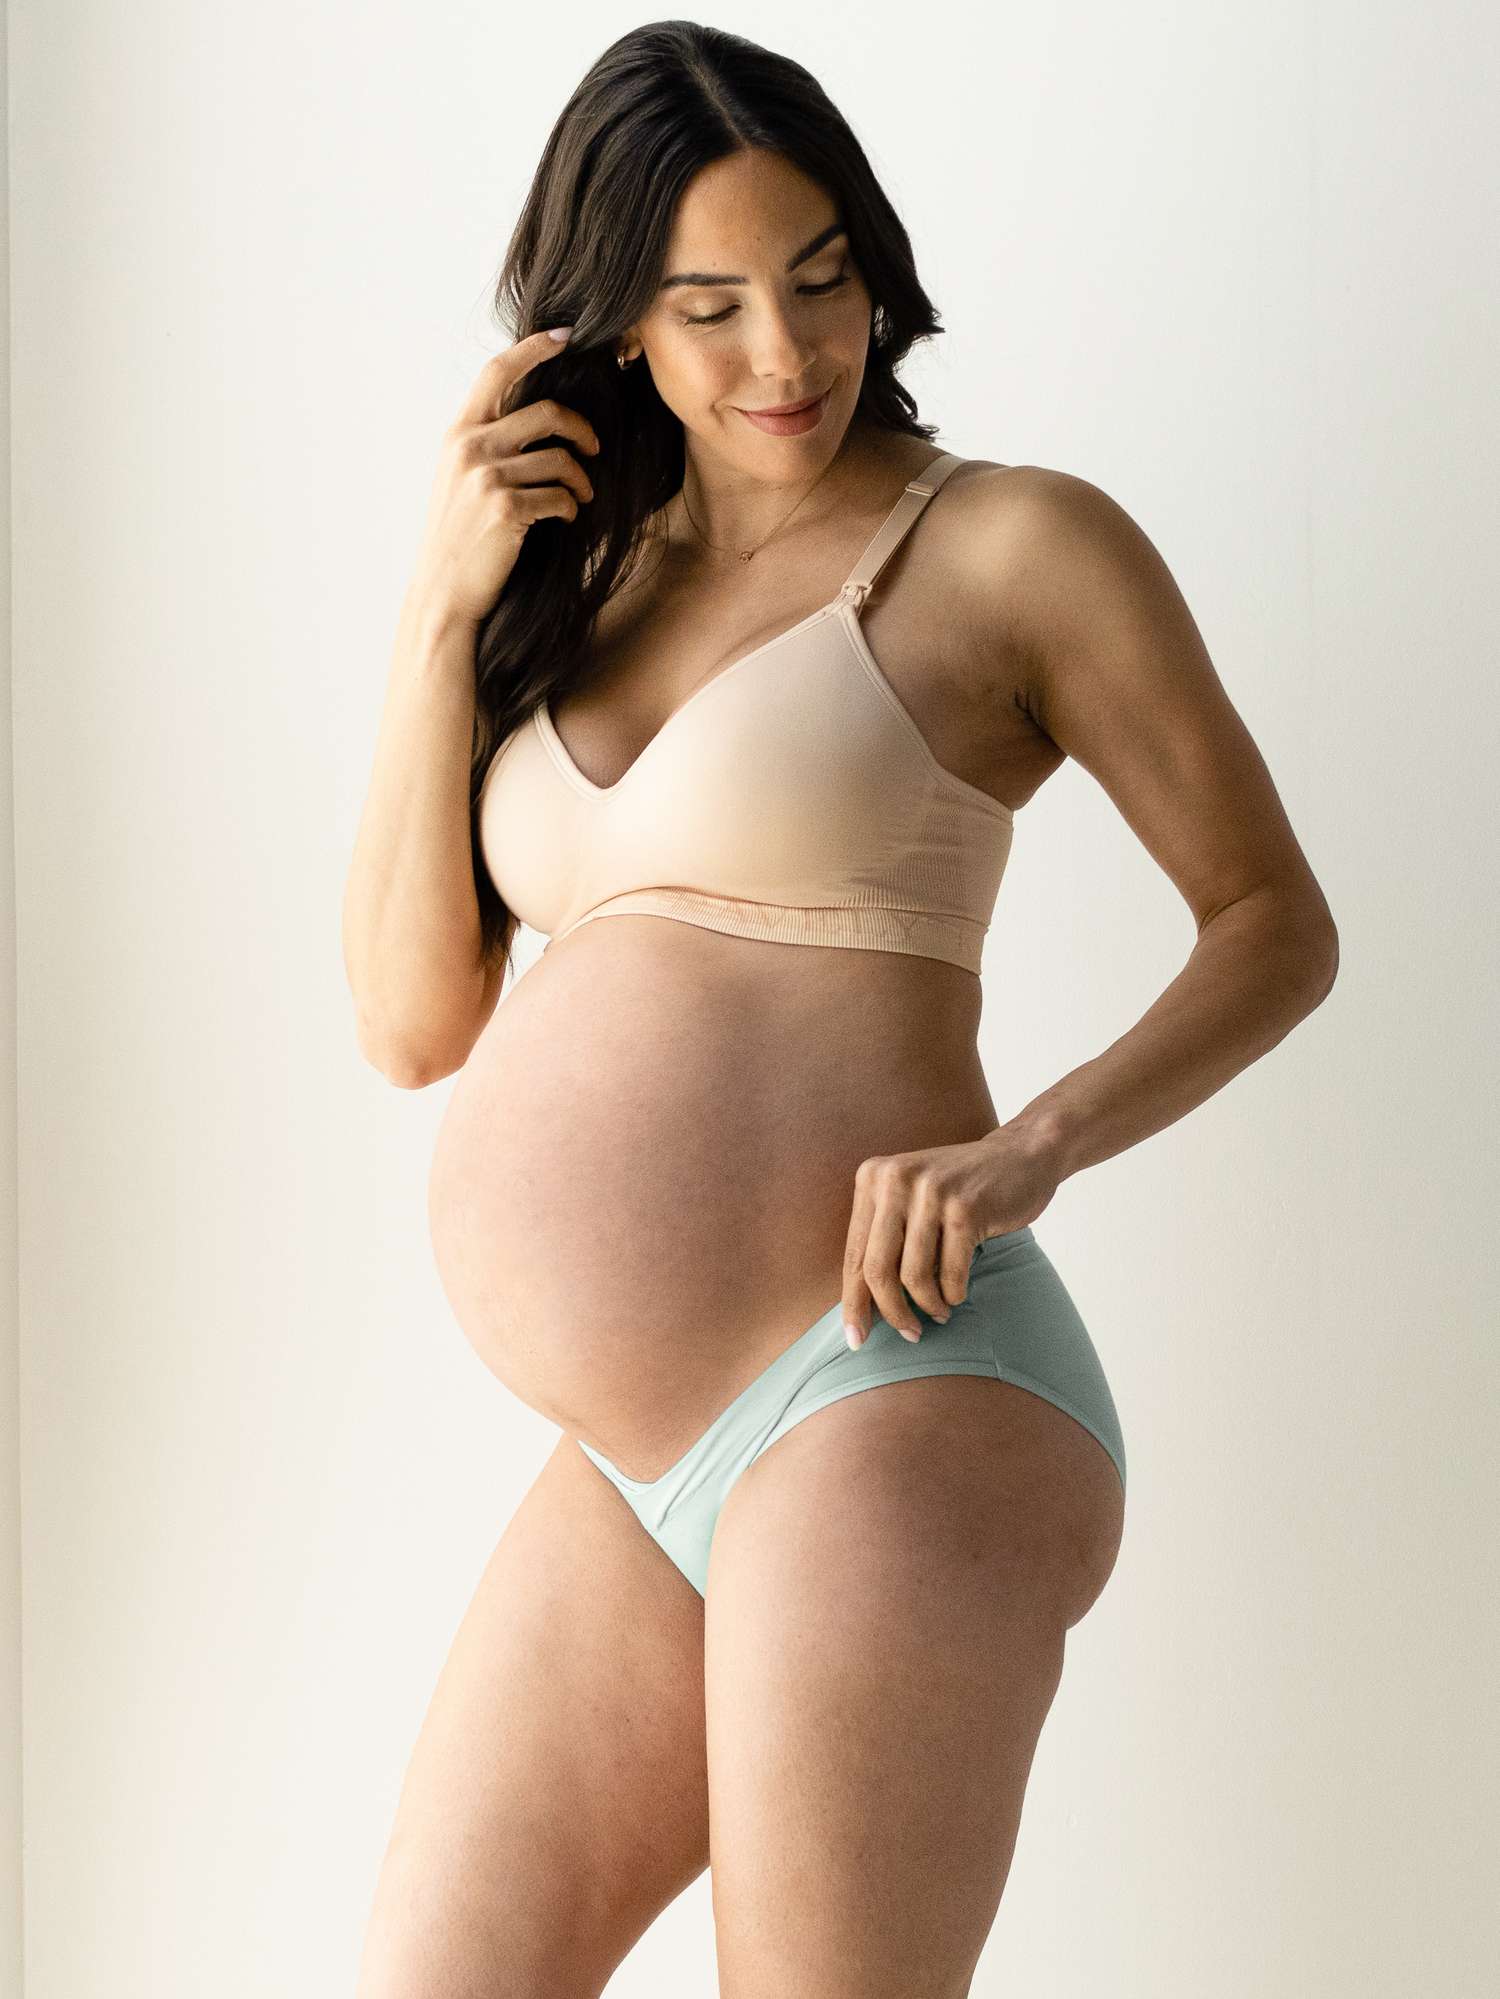 Under-the-Bump Bikini Underwear Pack | Low Rise Style - Assorted Milk & Baby